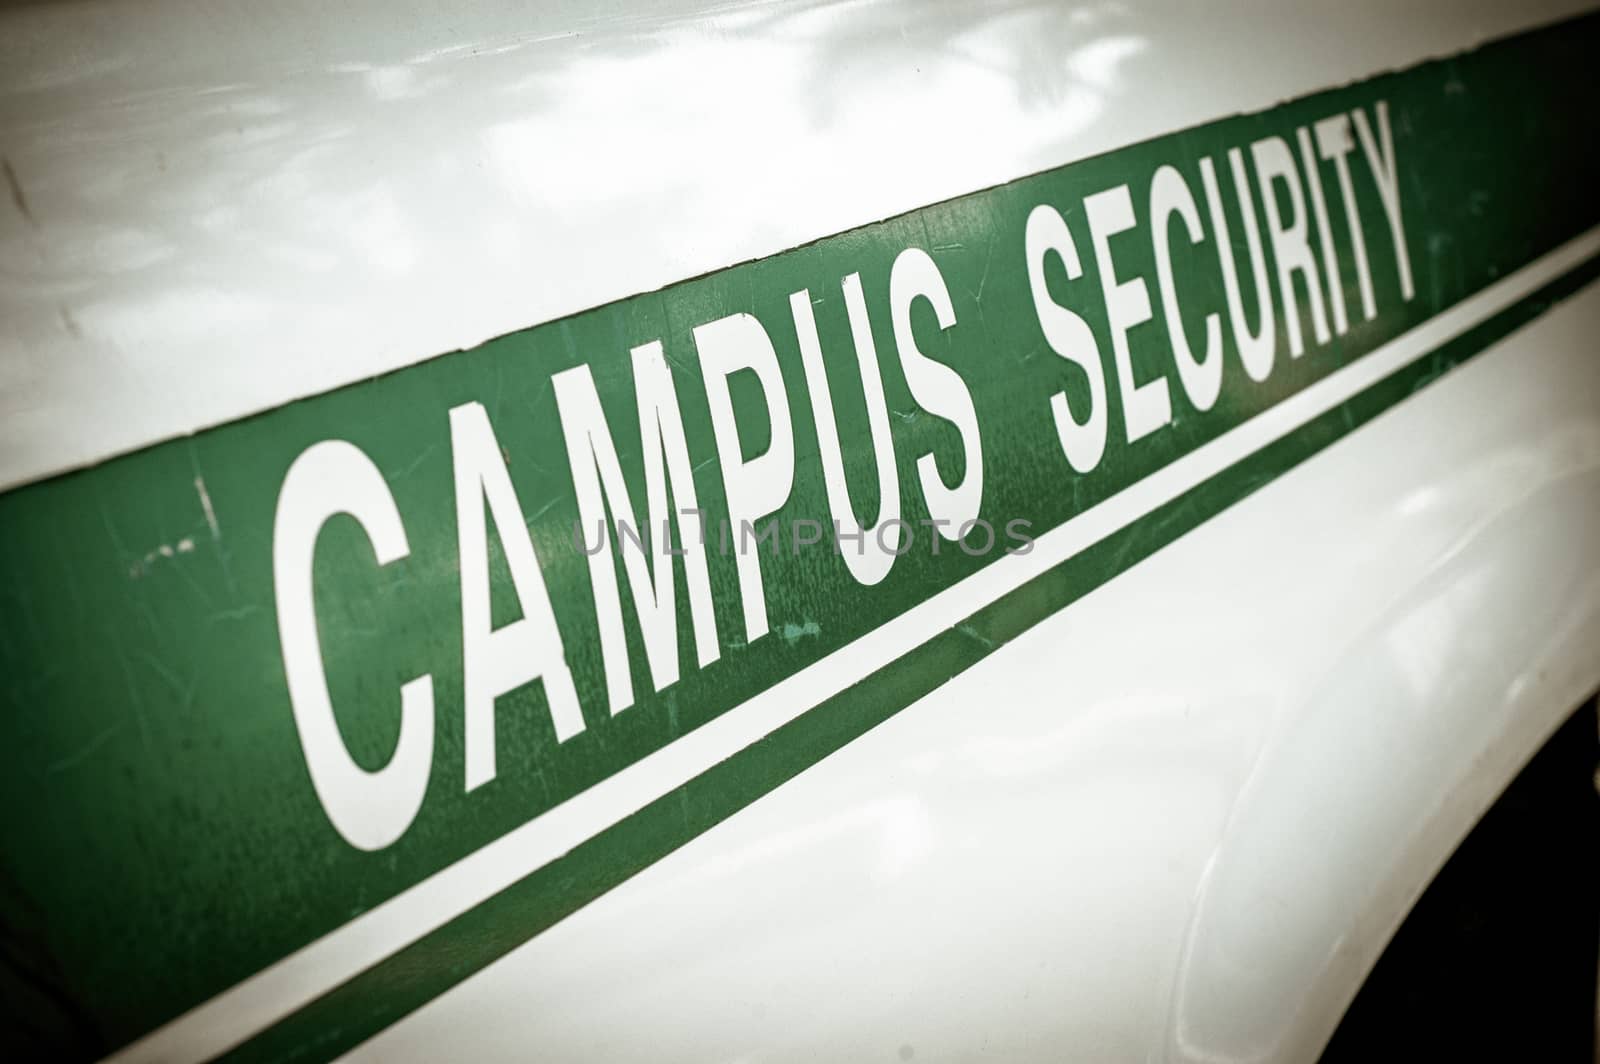 Retro Campus Security by mrdoomits